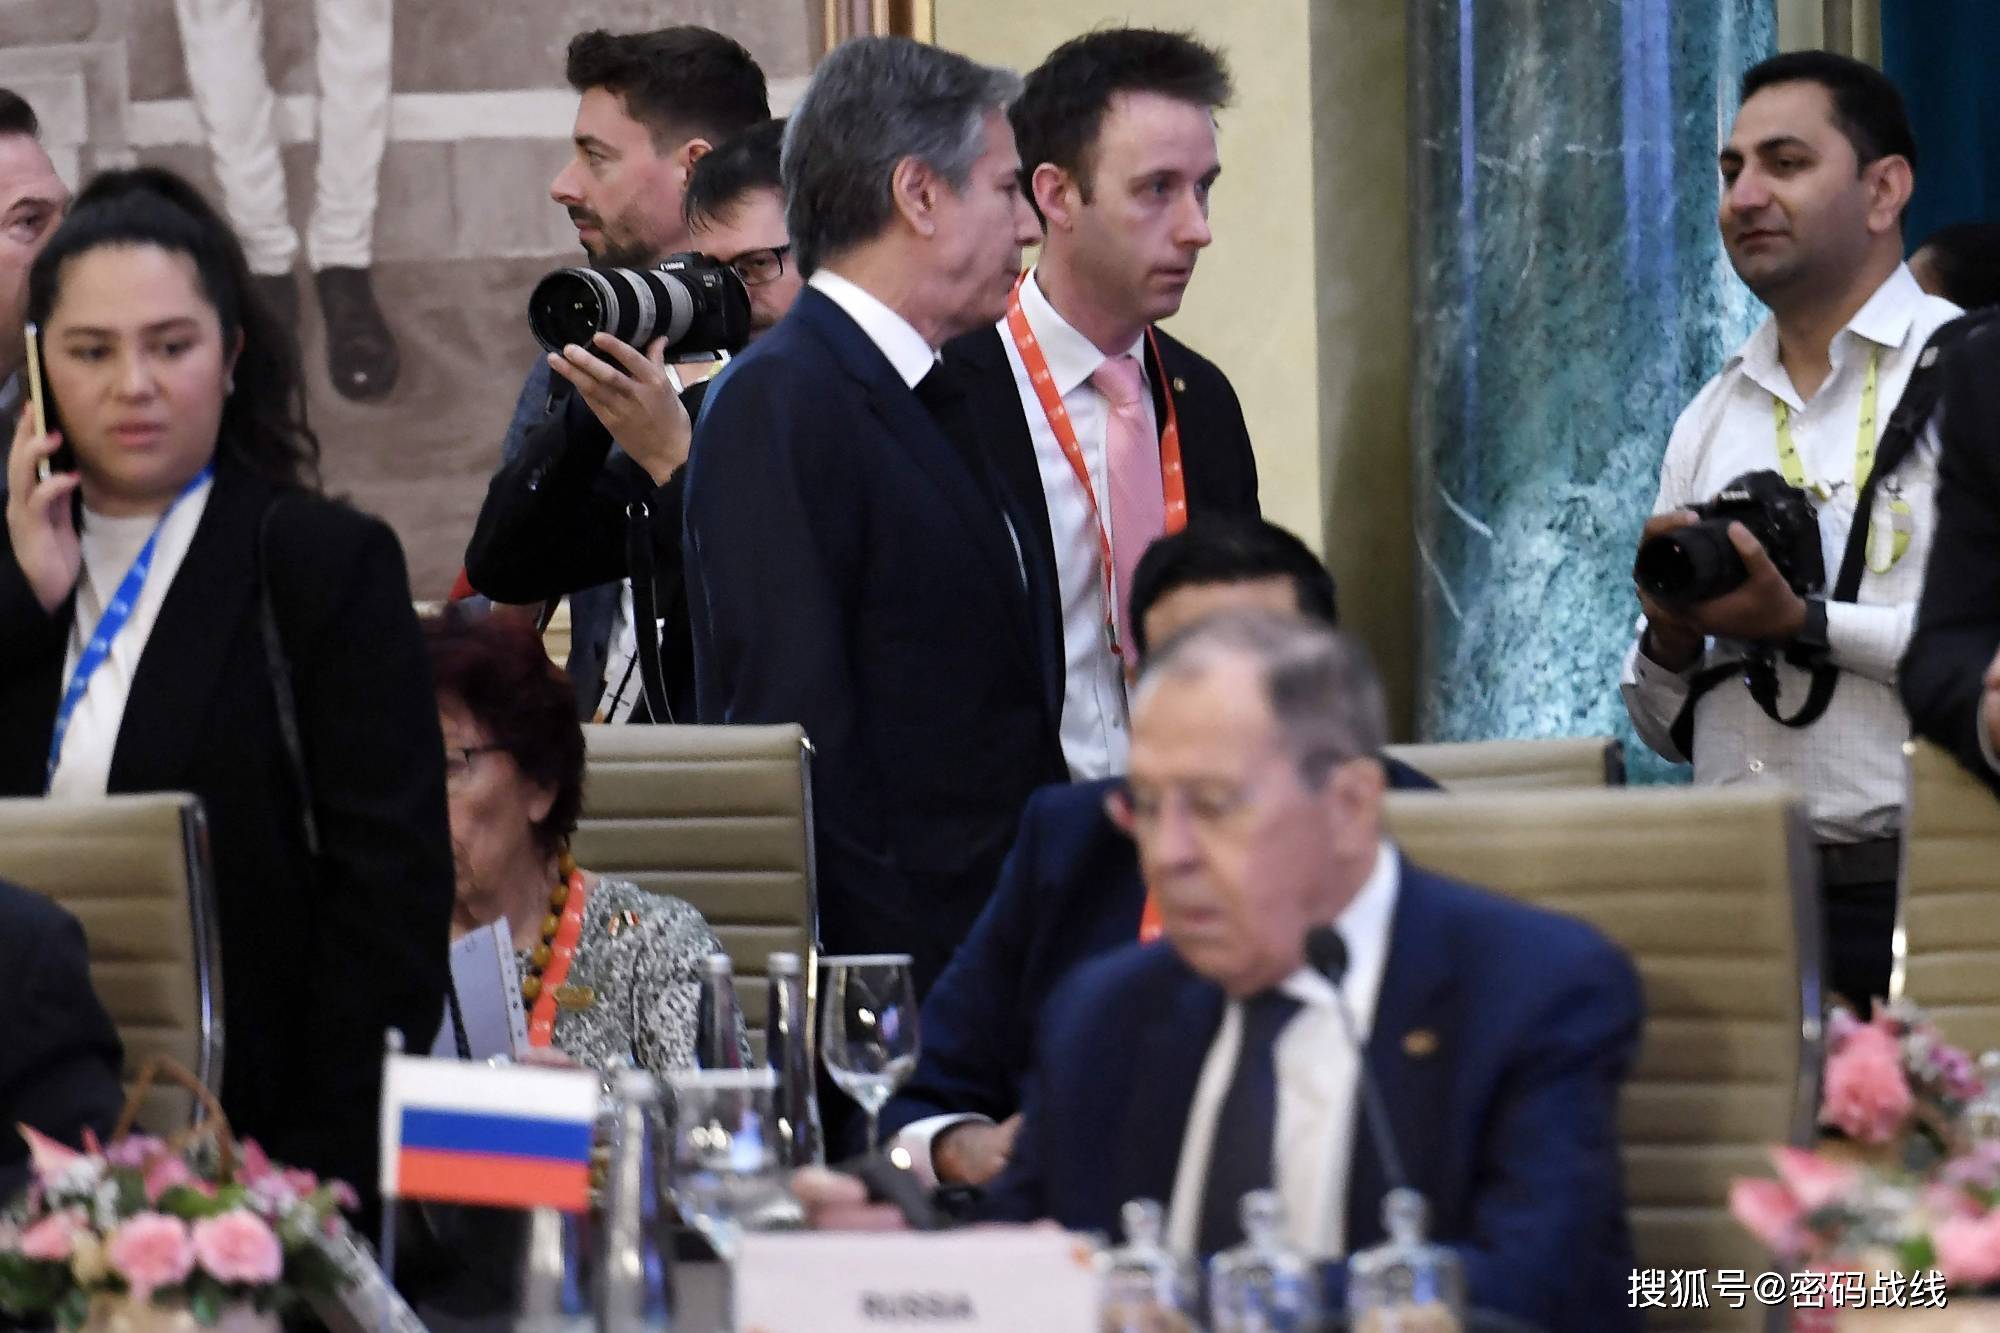 g20峰会上最新动态:美俄外交官近距离沉默,无视对方存在